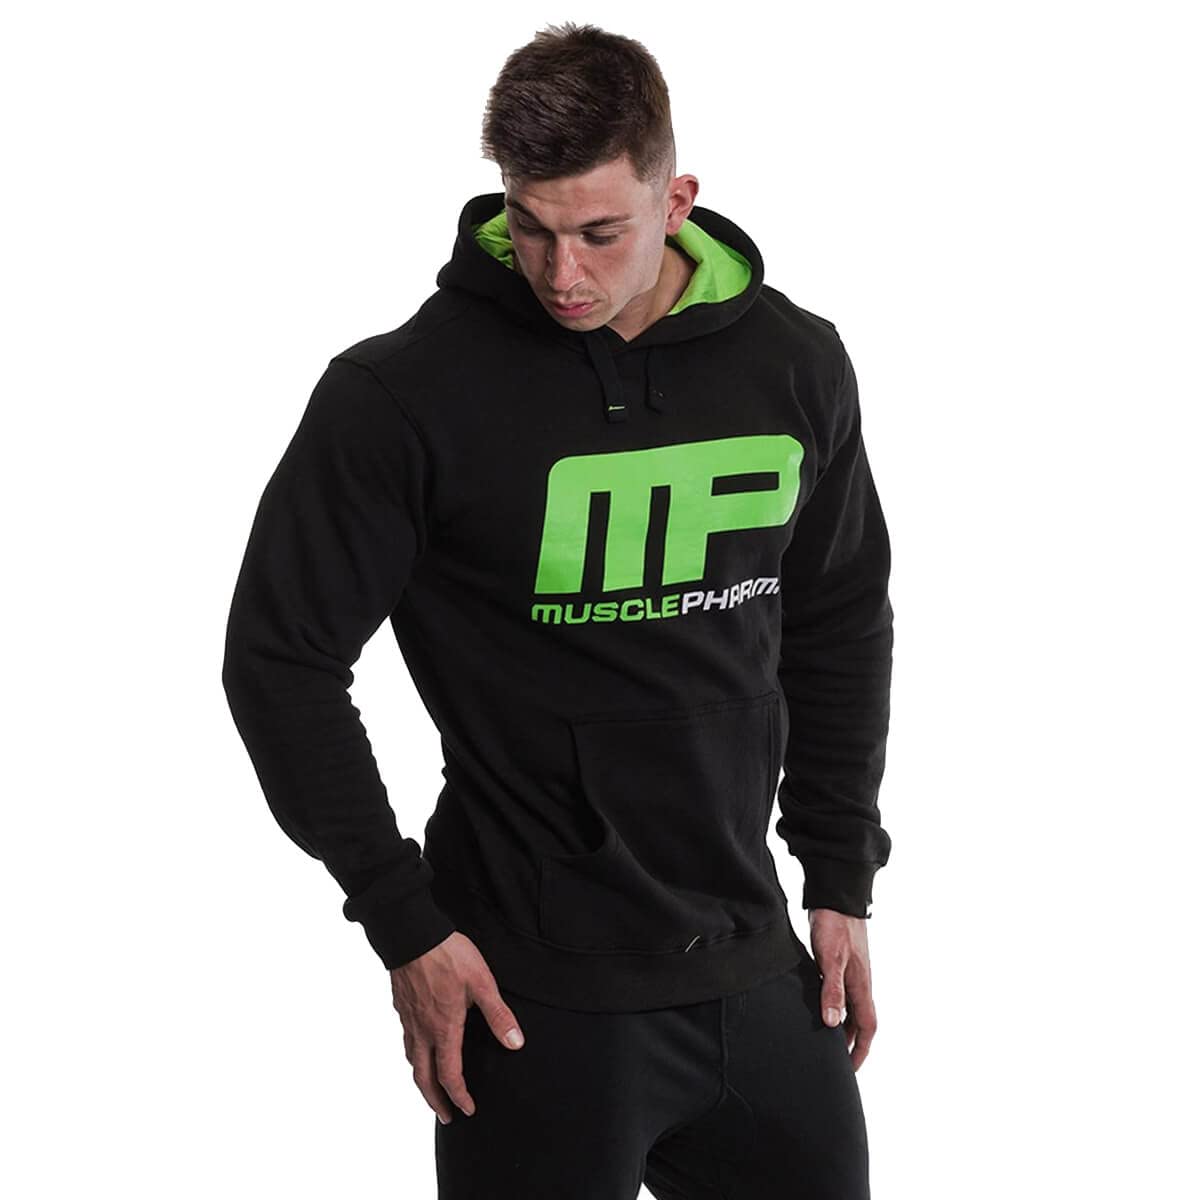 Muscle Pharm Herren Textilbekleidung Full Zip Hoody, Green, S, MPSWT447